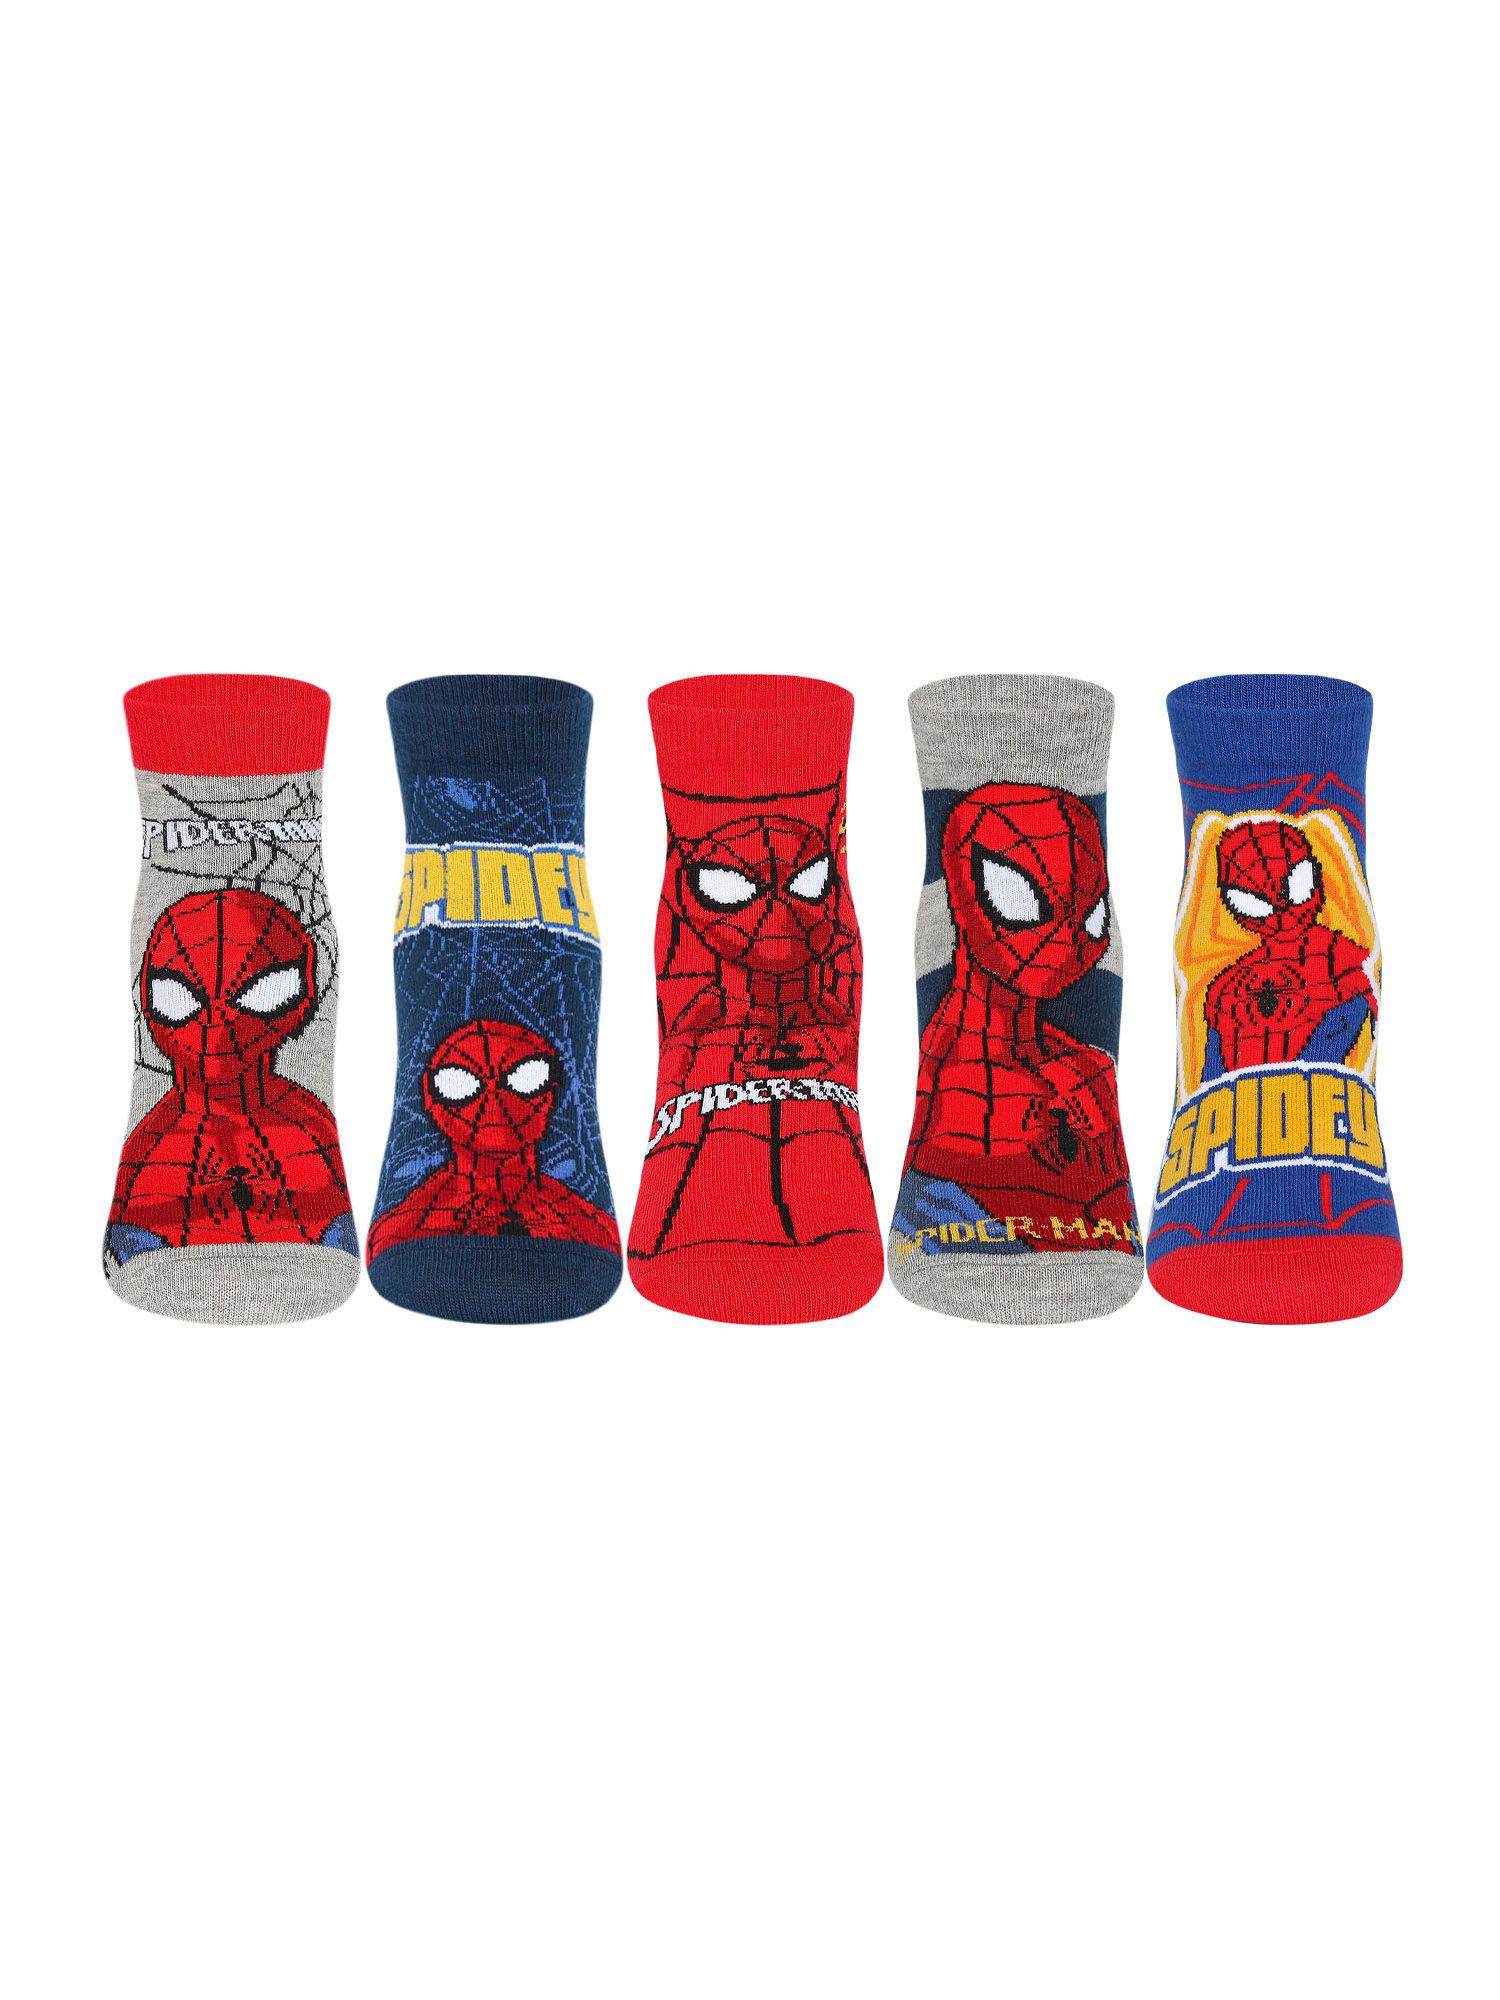 multi-color disney spiderman ankle length socks (pack of 5)